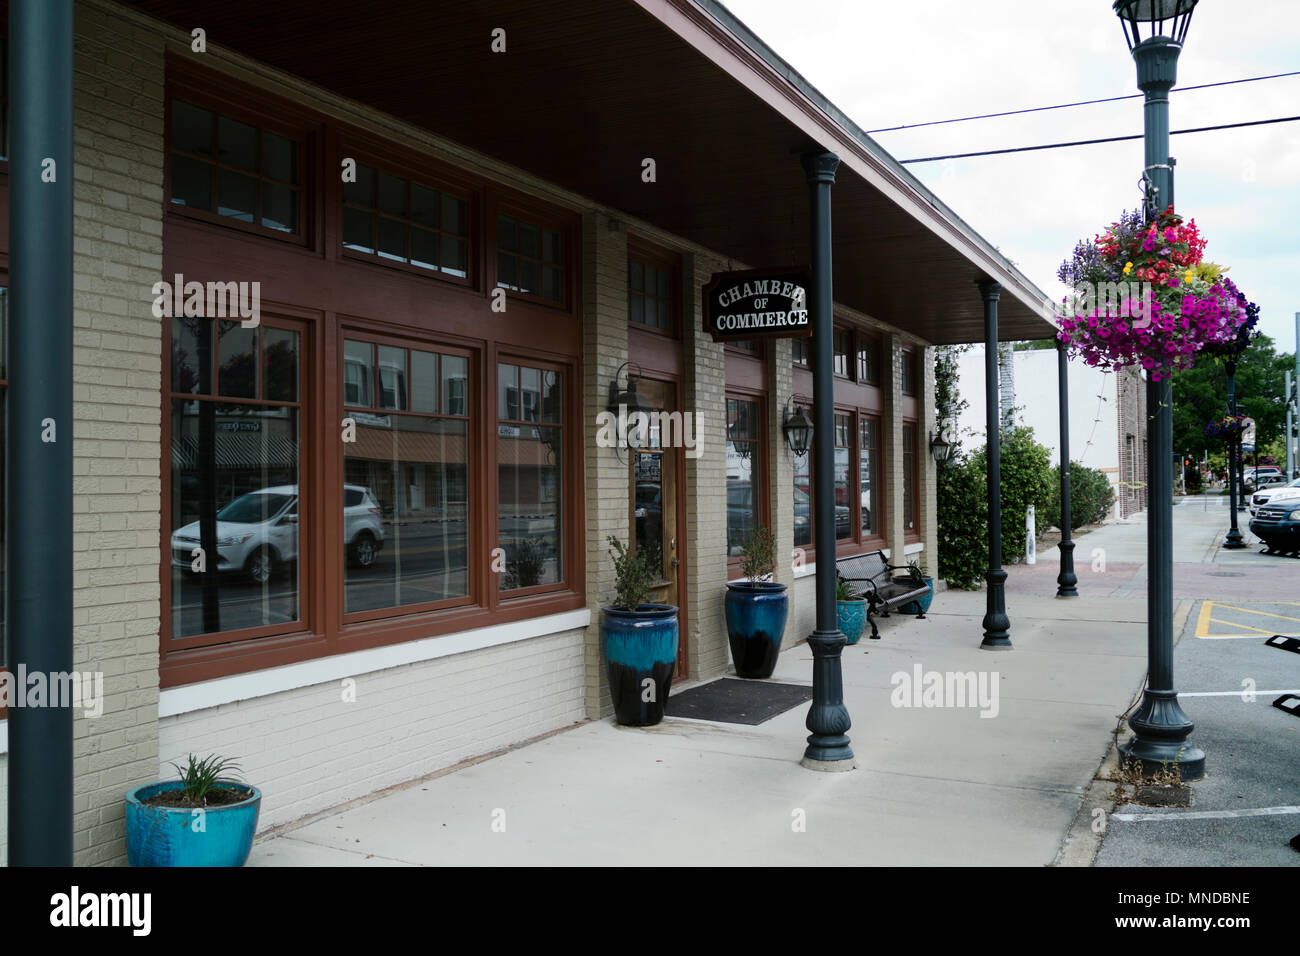 Handelskammer storefront in Ortsmitte Foley, Alabama, USA. Stockfoto